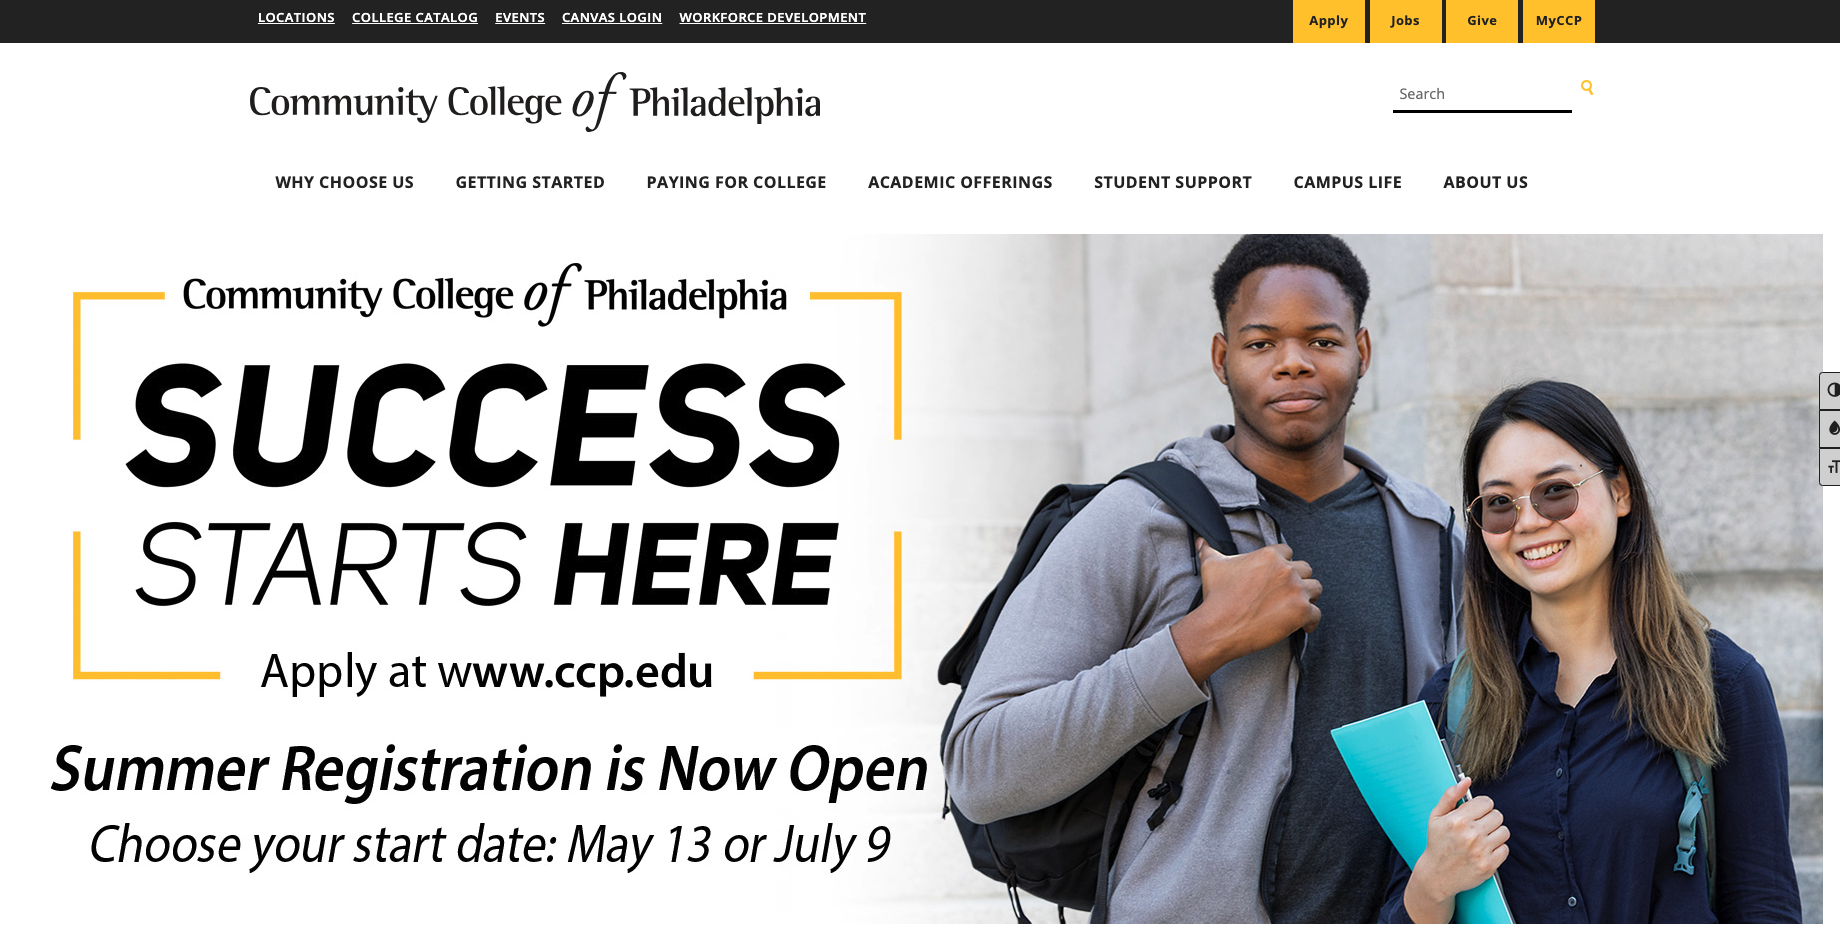 Community College of Philadelphia homepage